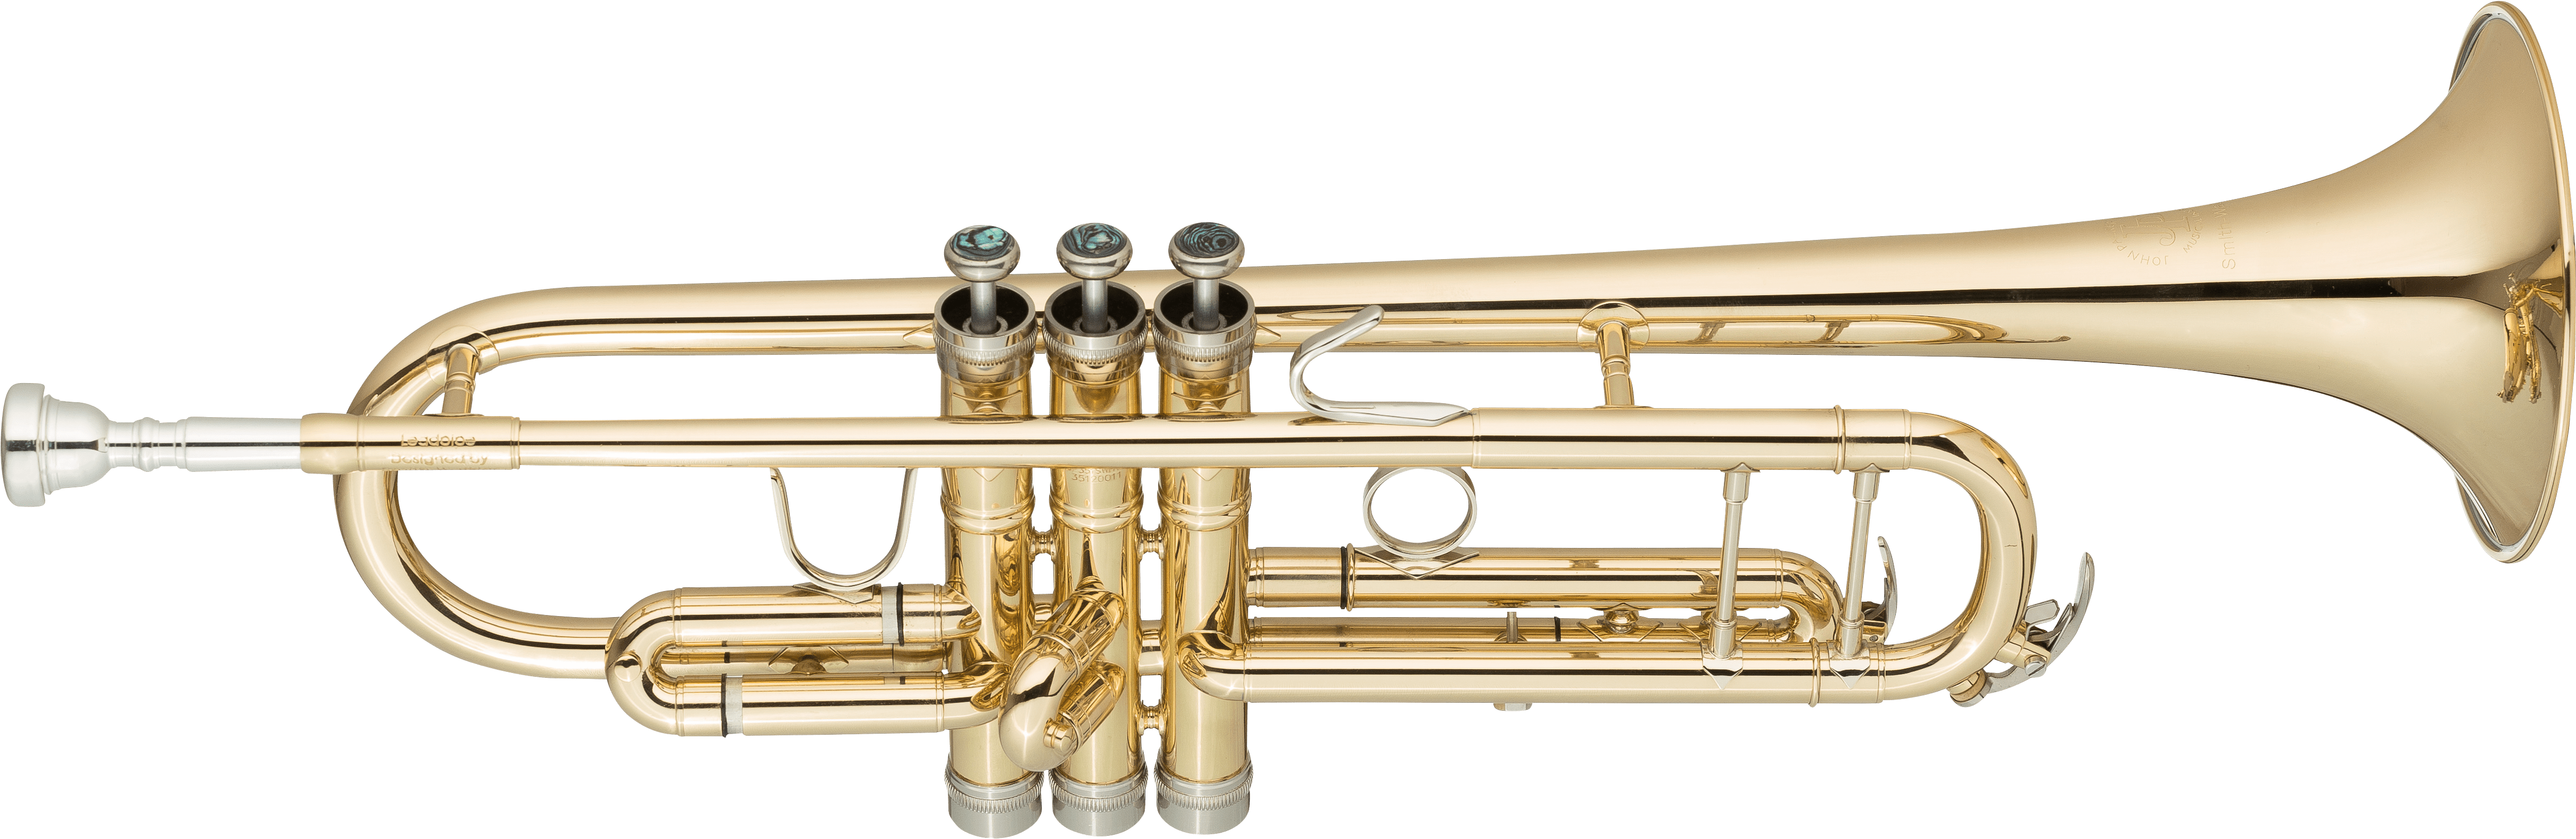 Yamaha Trumpet (5472x2189), Png Download